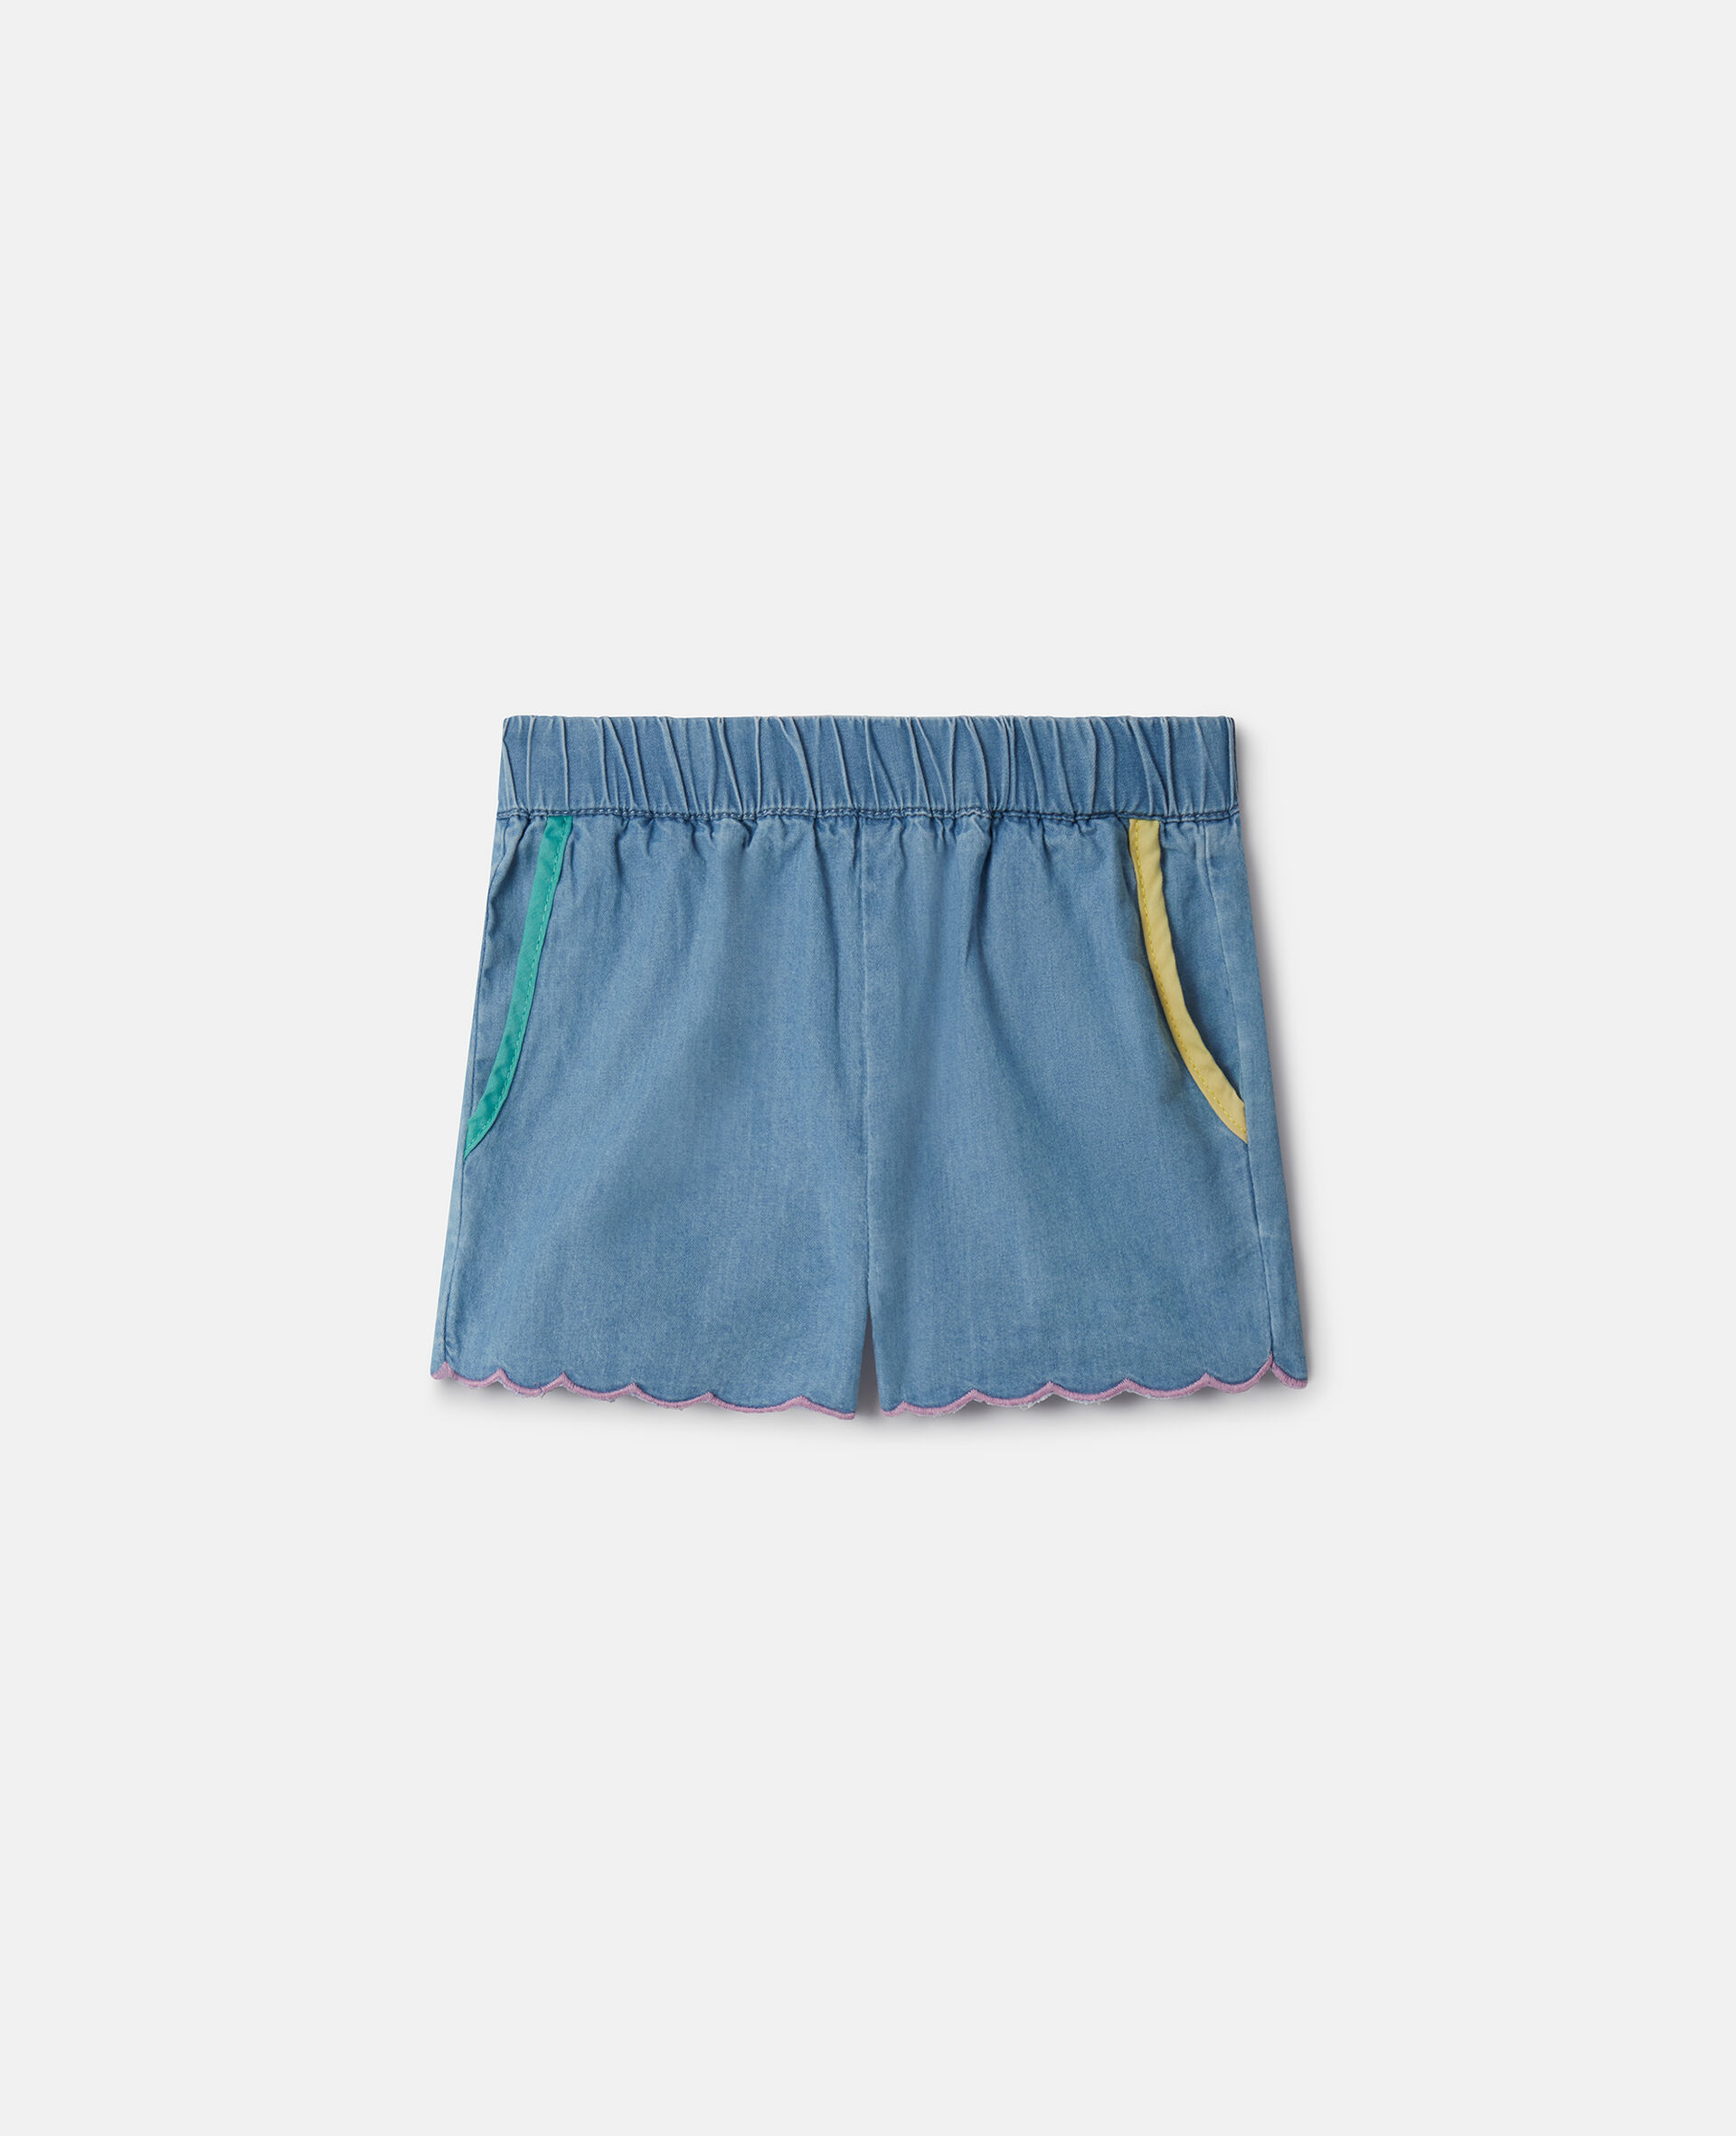 Scalloped Edge Chambray Shorts-Blue-medium